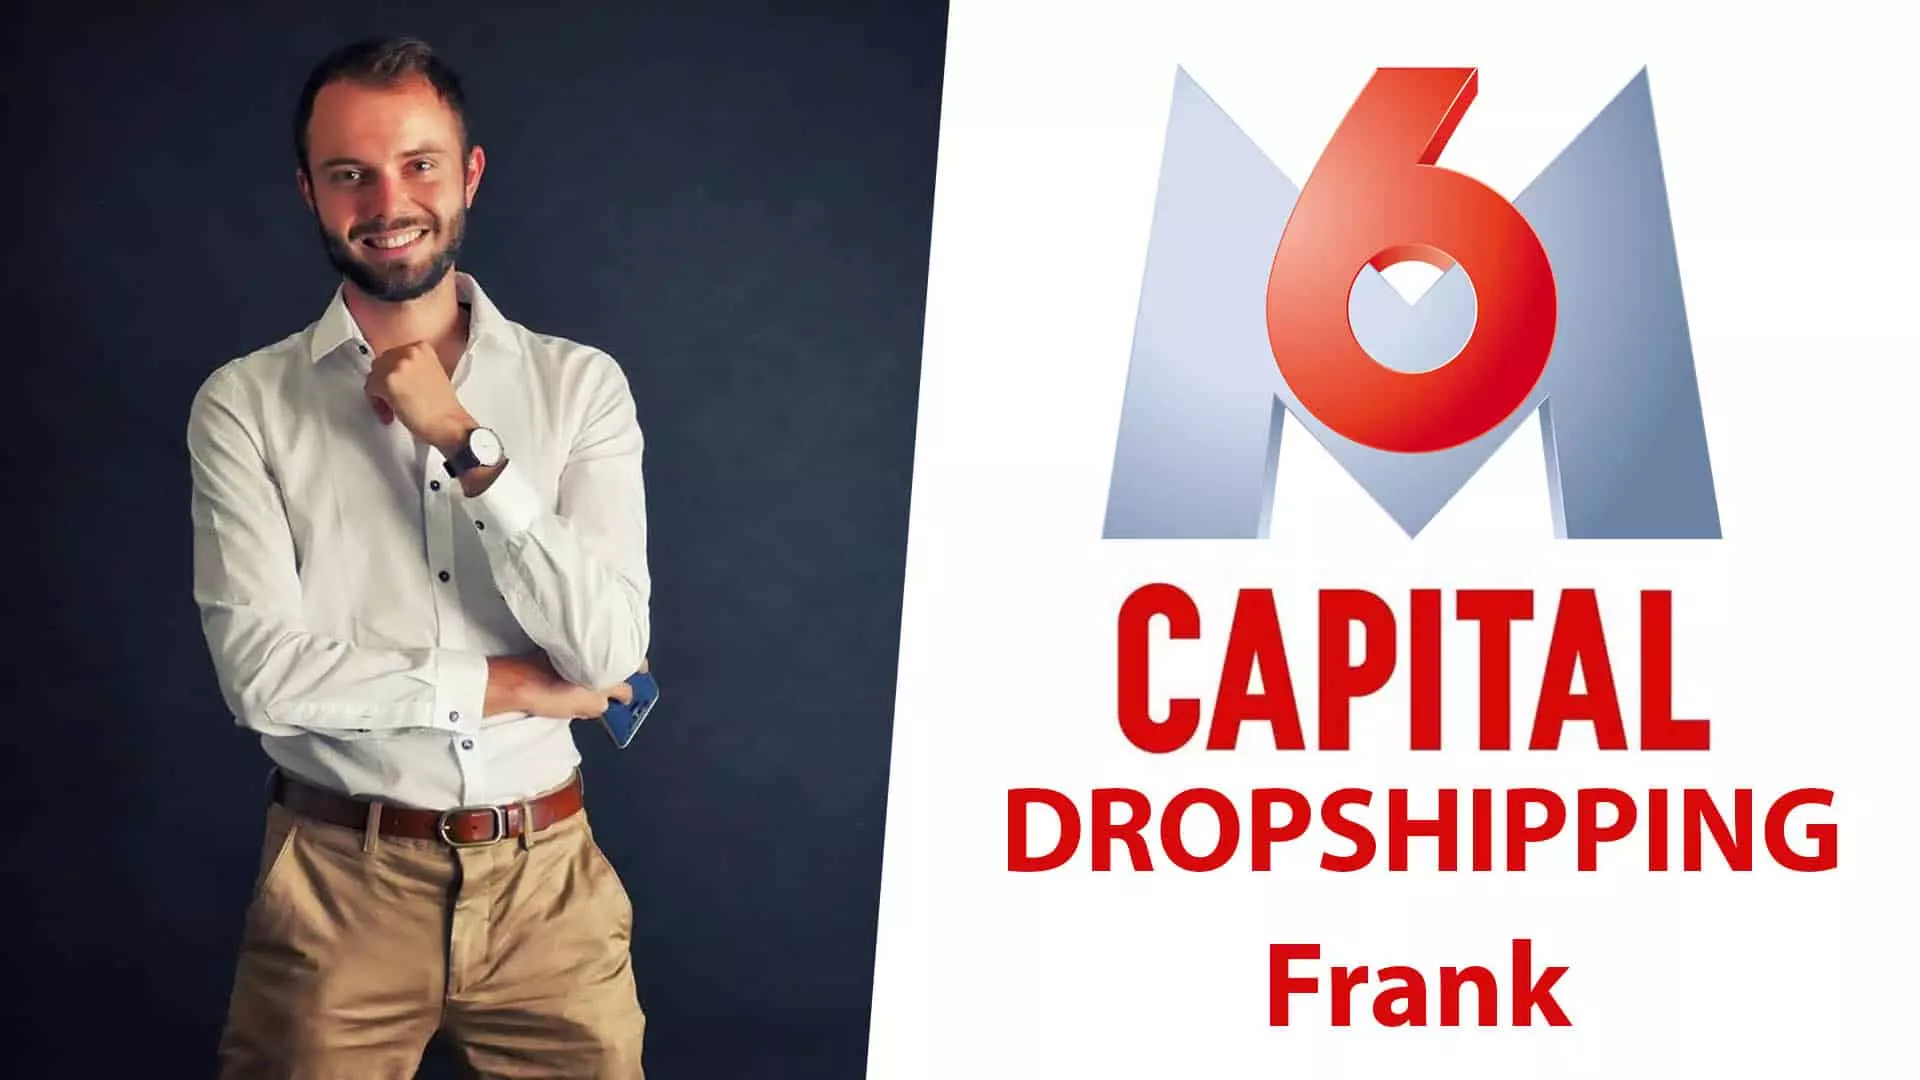 FranckHoubreentraind'expliquerpourquoiilafaitl'émissionCapitalsurMausujetdudropshipping